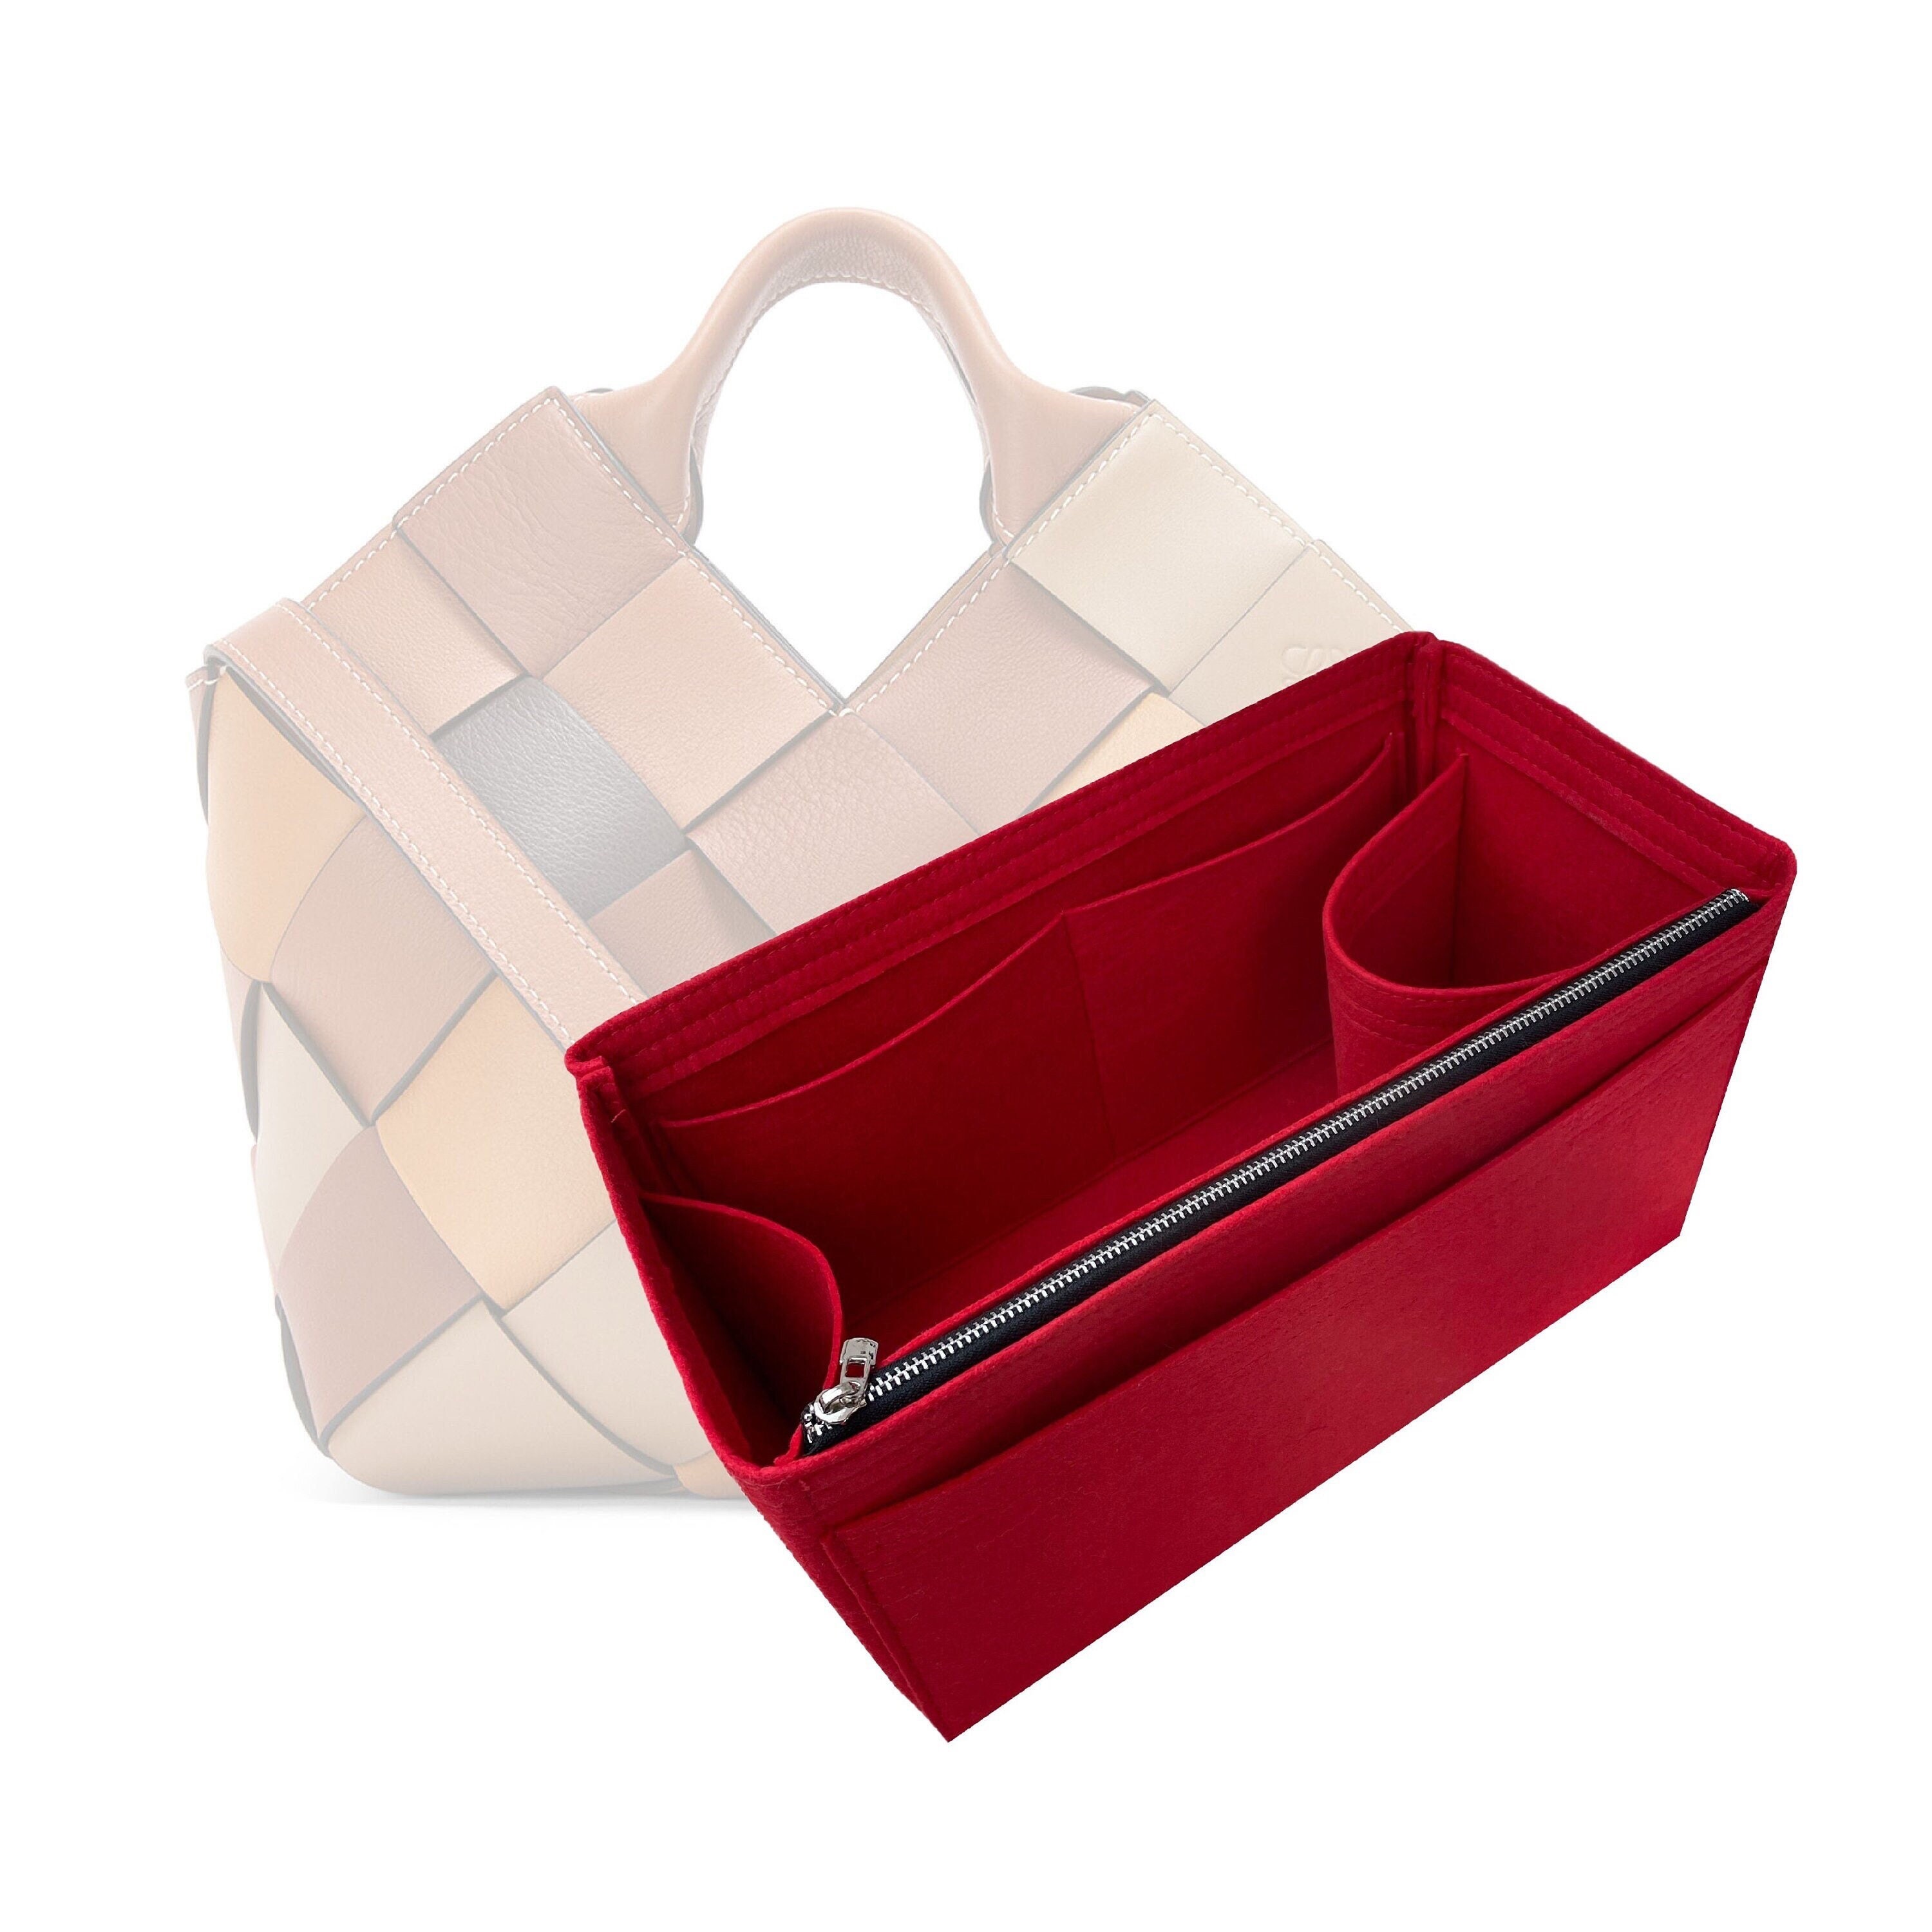 Buy Free Shipping [Used] LOEWE Basket Medium Basket Bag Handbag Raffia  Leather Beige Brown 327.02.S92 from Japan - Buy authentic Plus exclusive  items from Japan